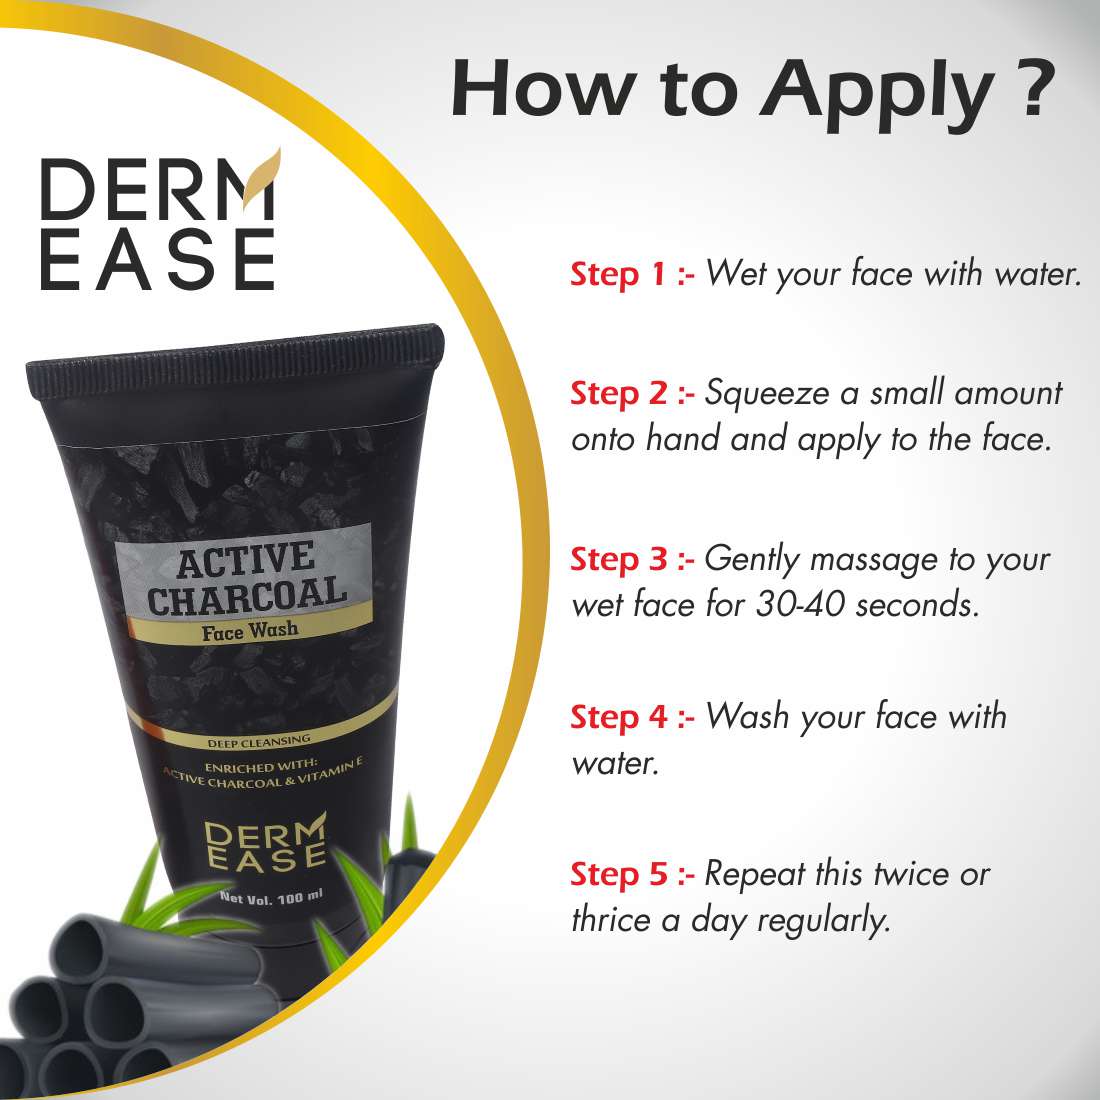 DERM EASE Active Charcoal Face Wash Combo